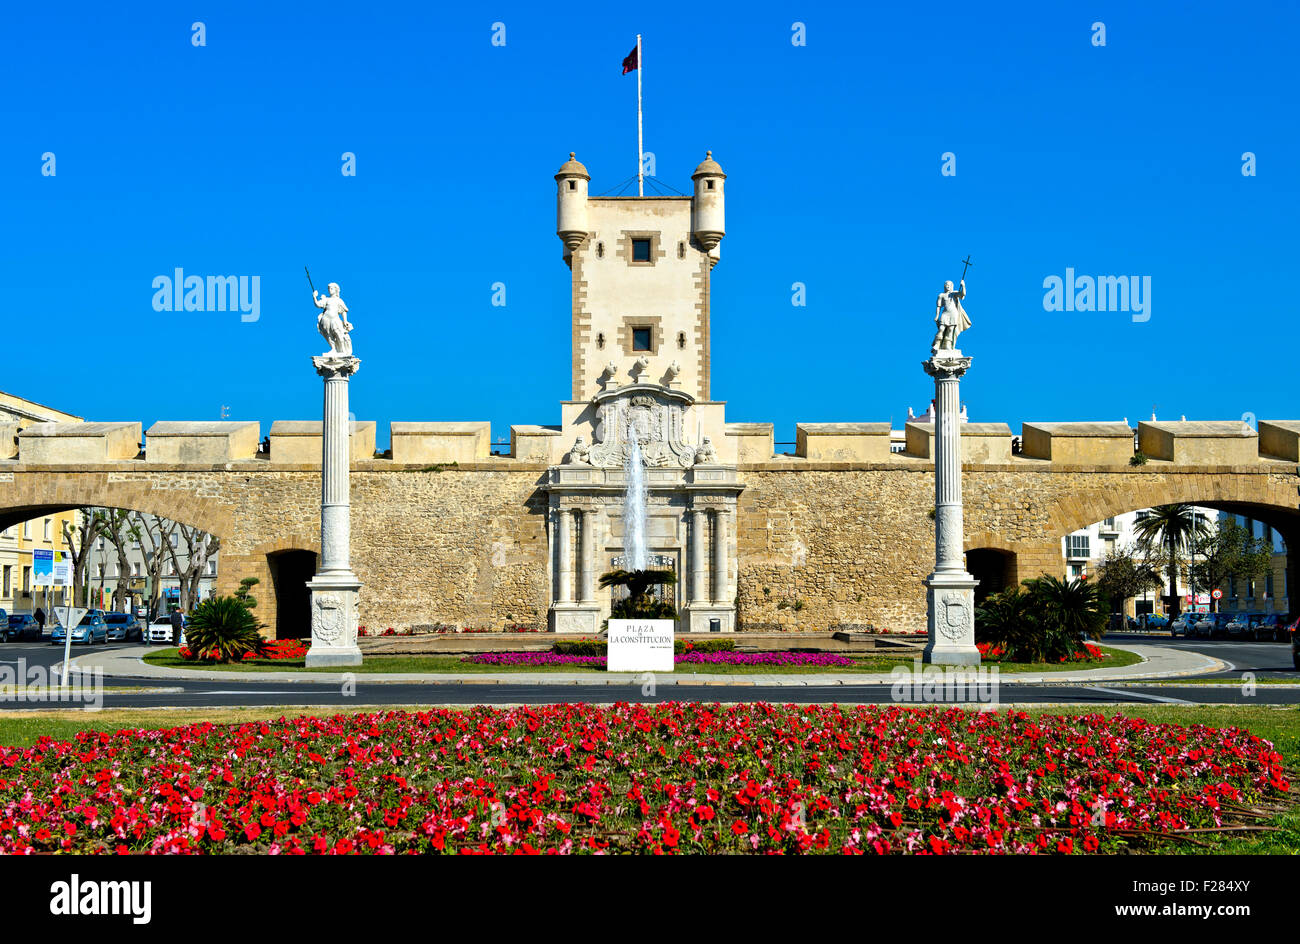 City gate Puerta de Tierra gate at Plaza de la Constitucion, Cádiz, Andalusia, Spain Stock Photo